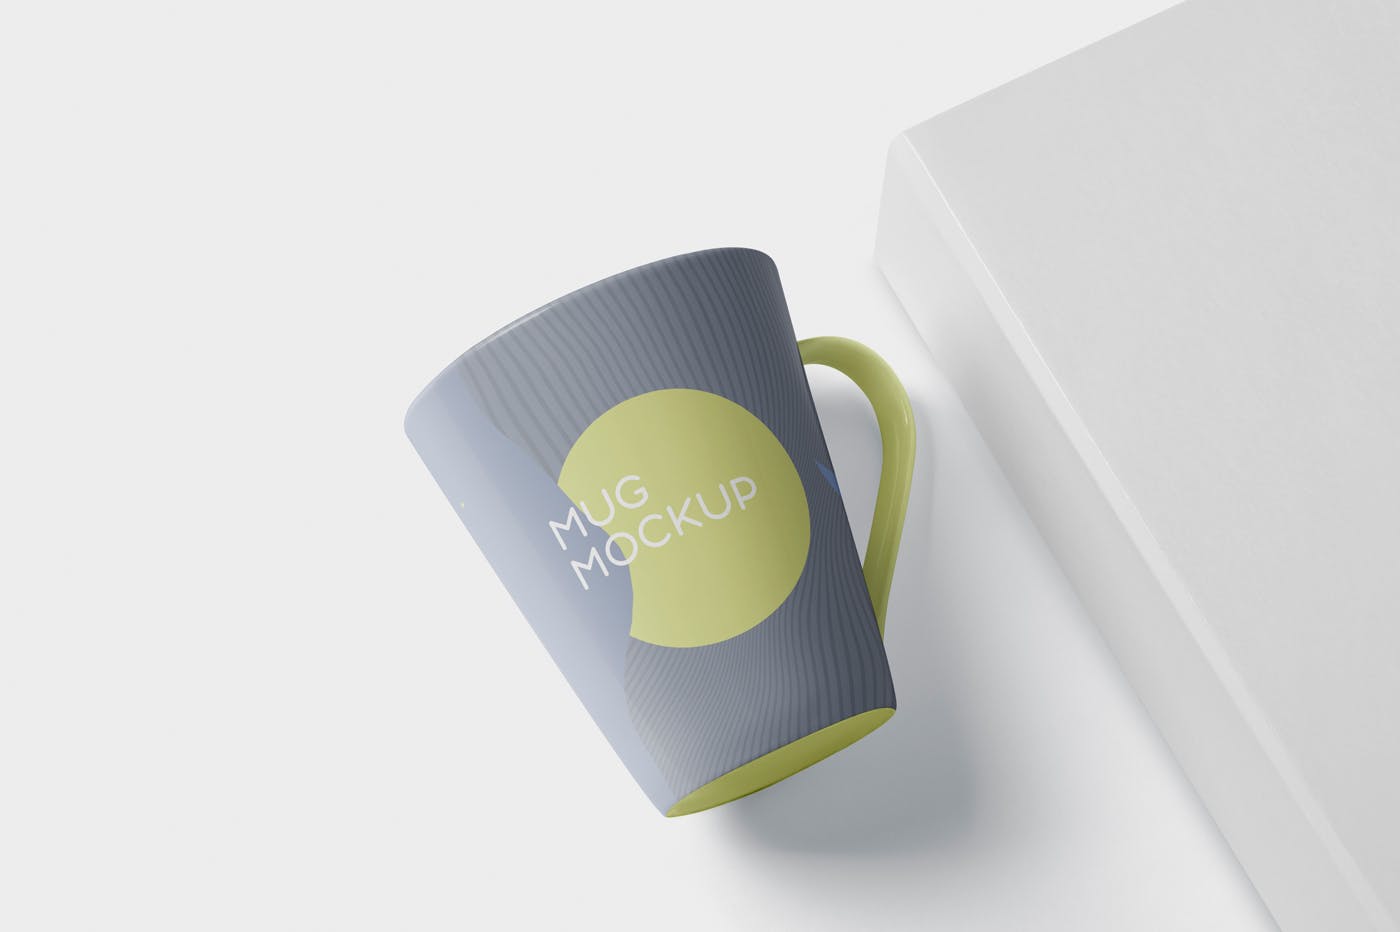 锥形马克杯图案设计16图库精选 Mug Mockup – Cone Shaped插图(4)